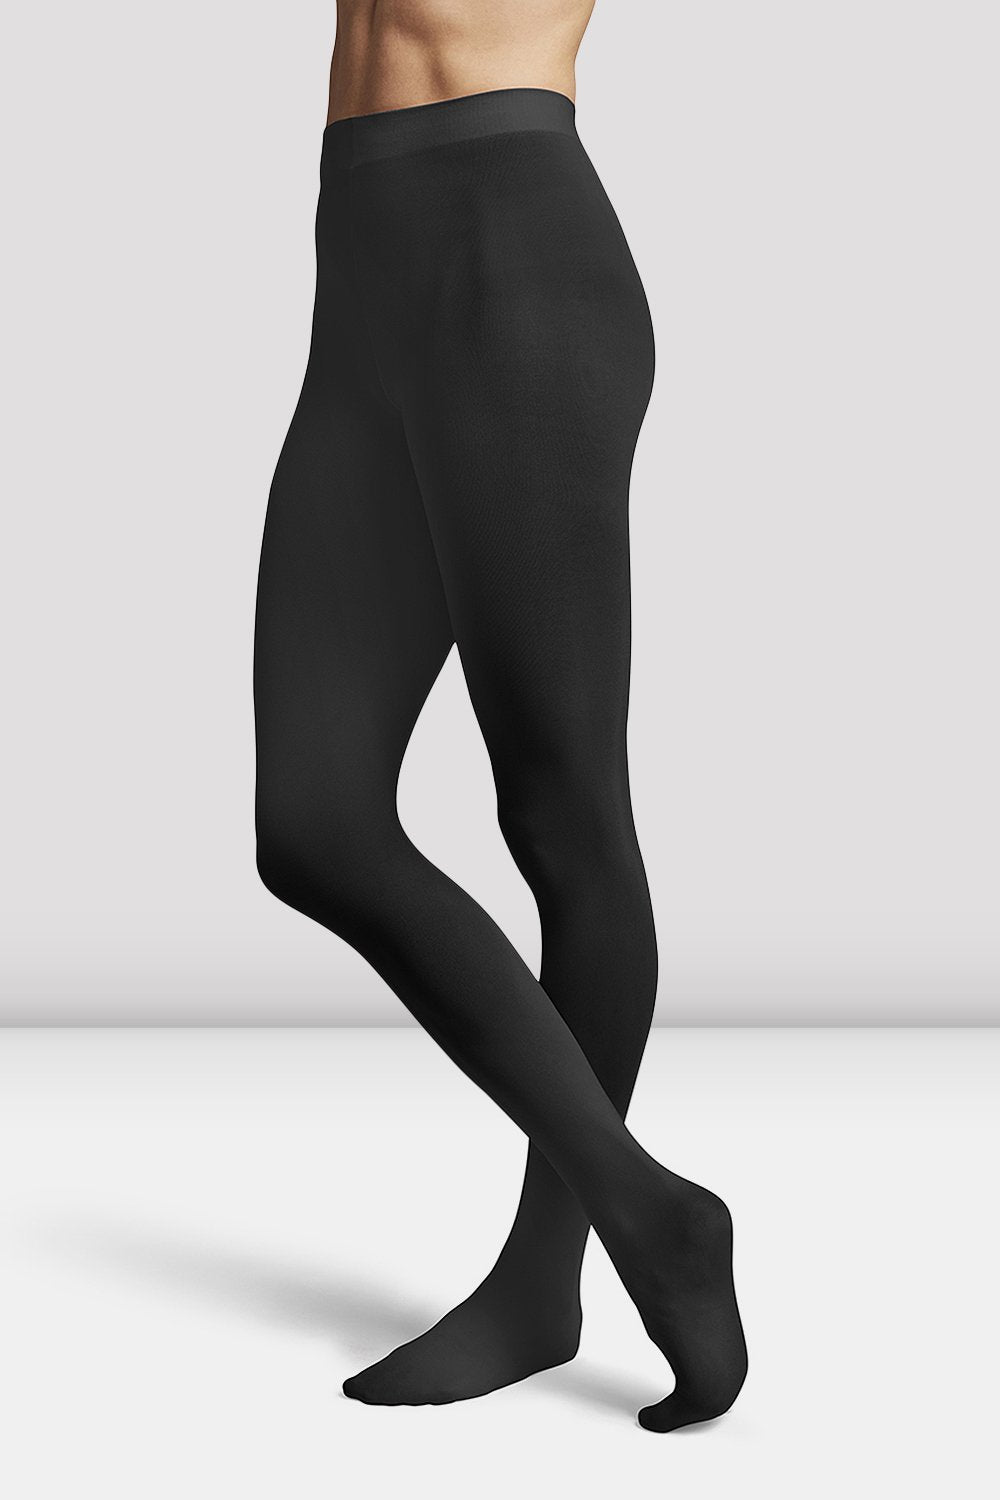 Nylon Lycra Inside Out Footless Black Legging - Porselli Dancewear